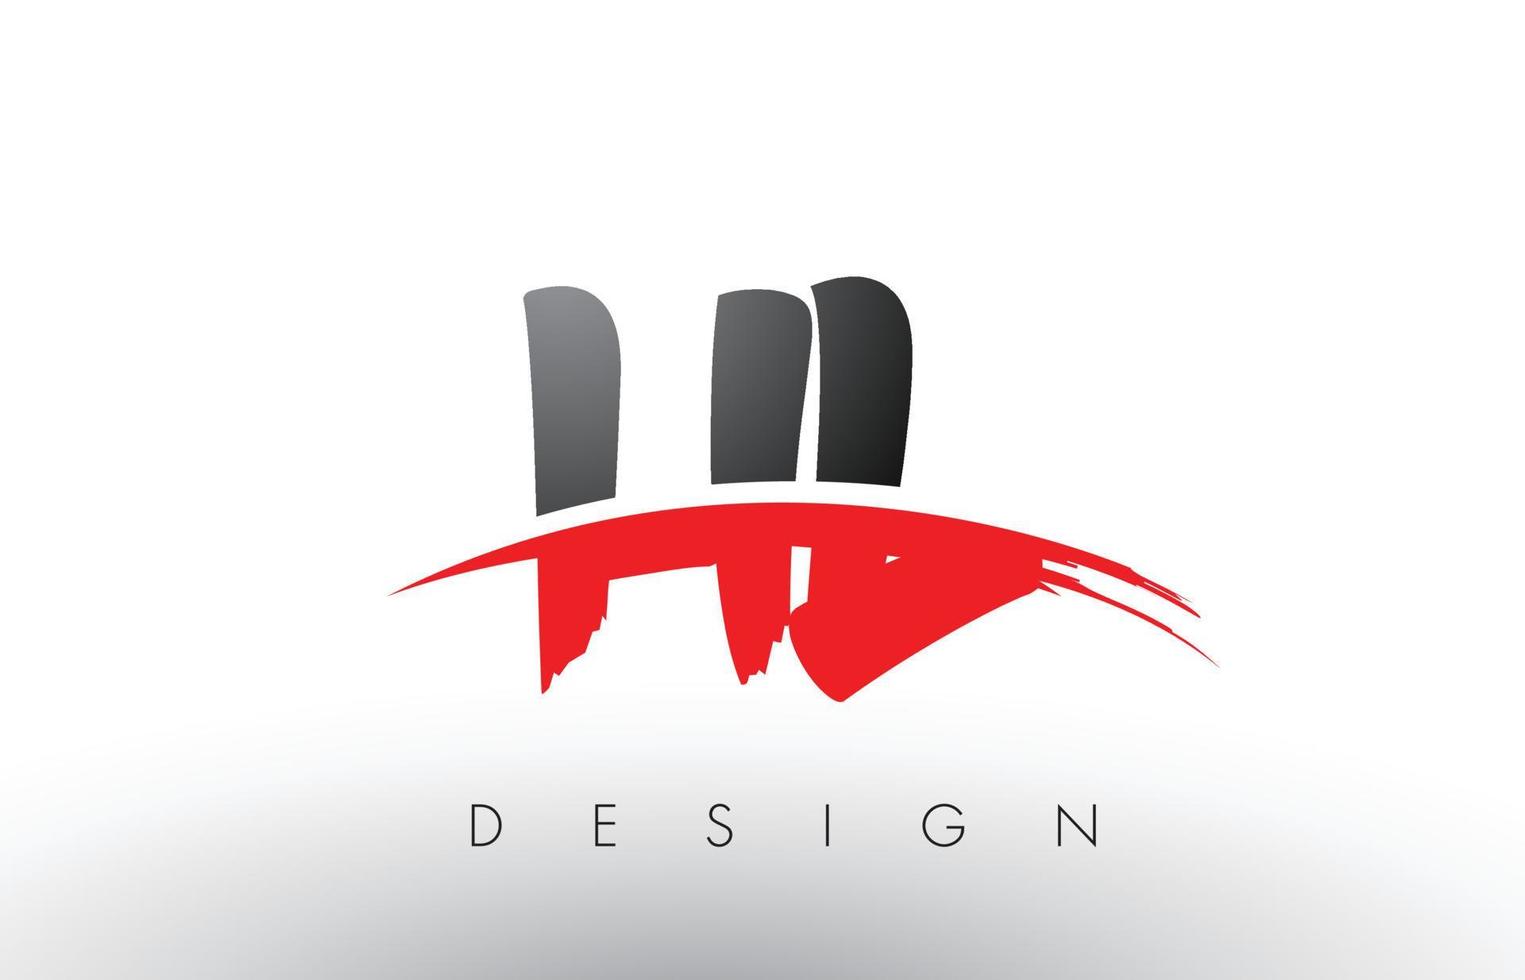 hl hl brush logo letters met rode en zwarte swoosh brush voorkant vector